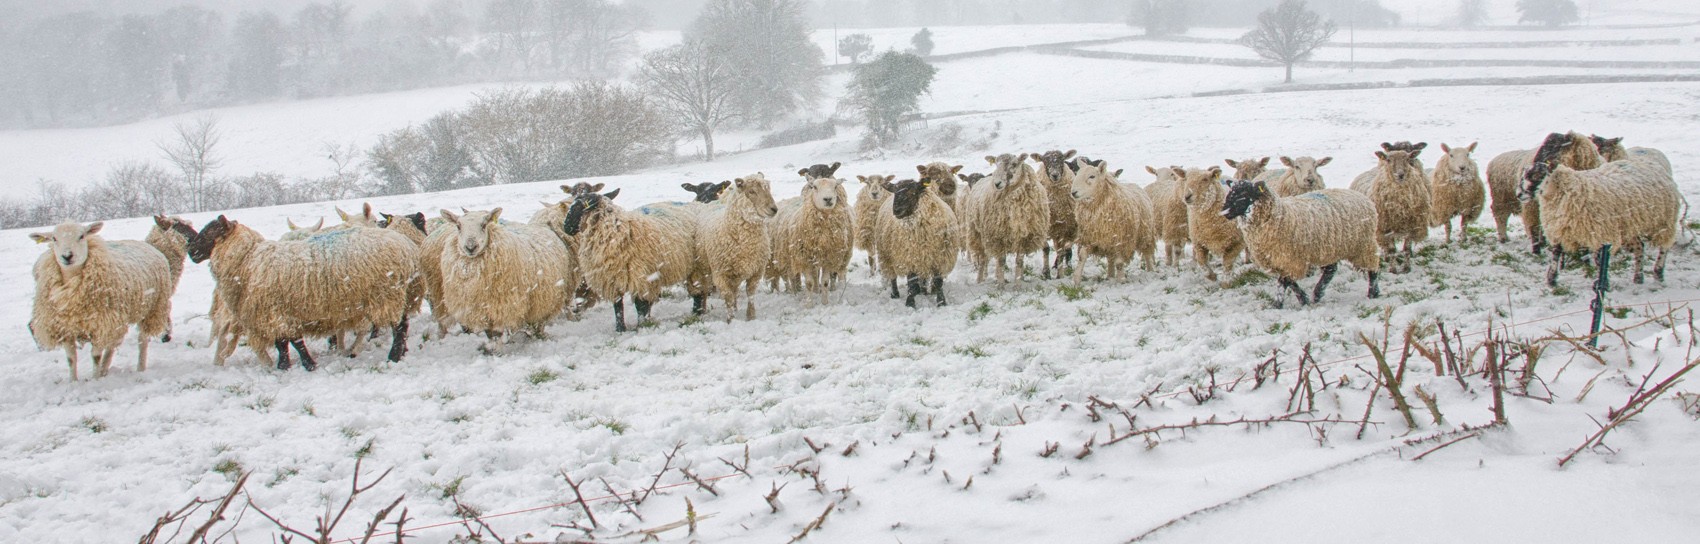 Sheep in the snow near Denbury, in Devon. Photograph by ALEX GRAEME